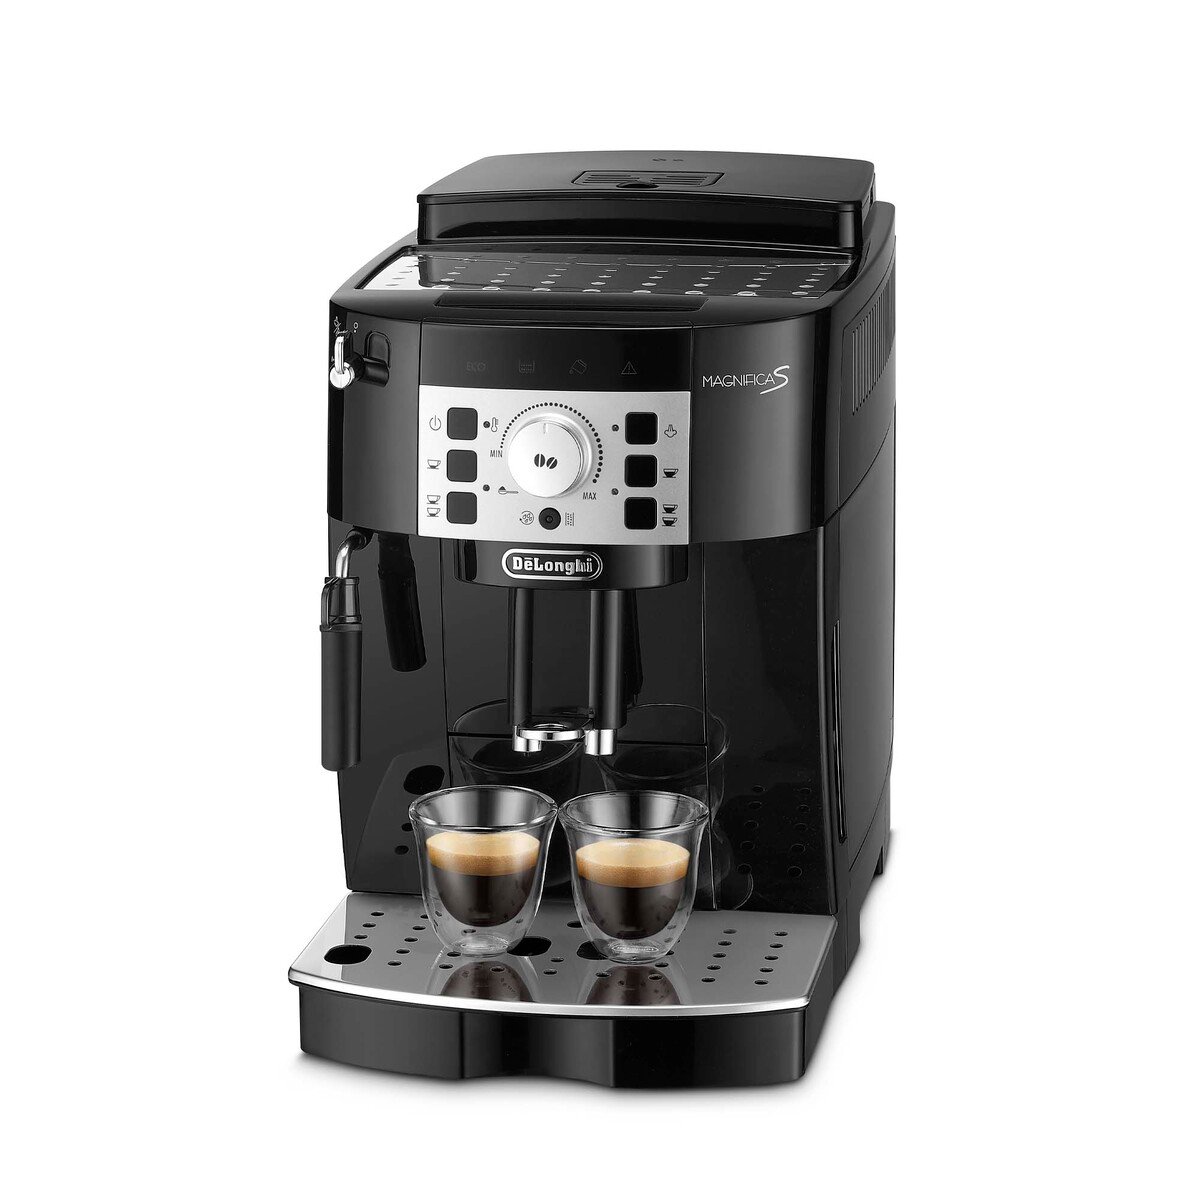 Delonghi Magnifica S ECAM22.110.B Fully Automatic Coffee Machine